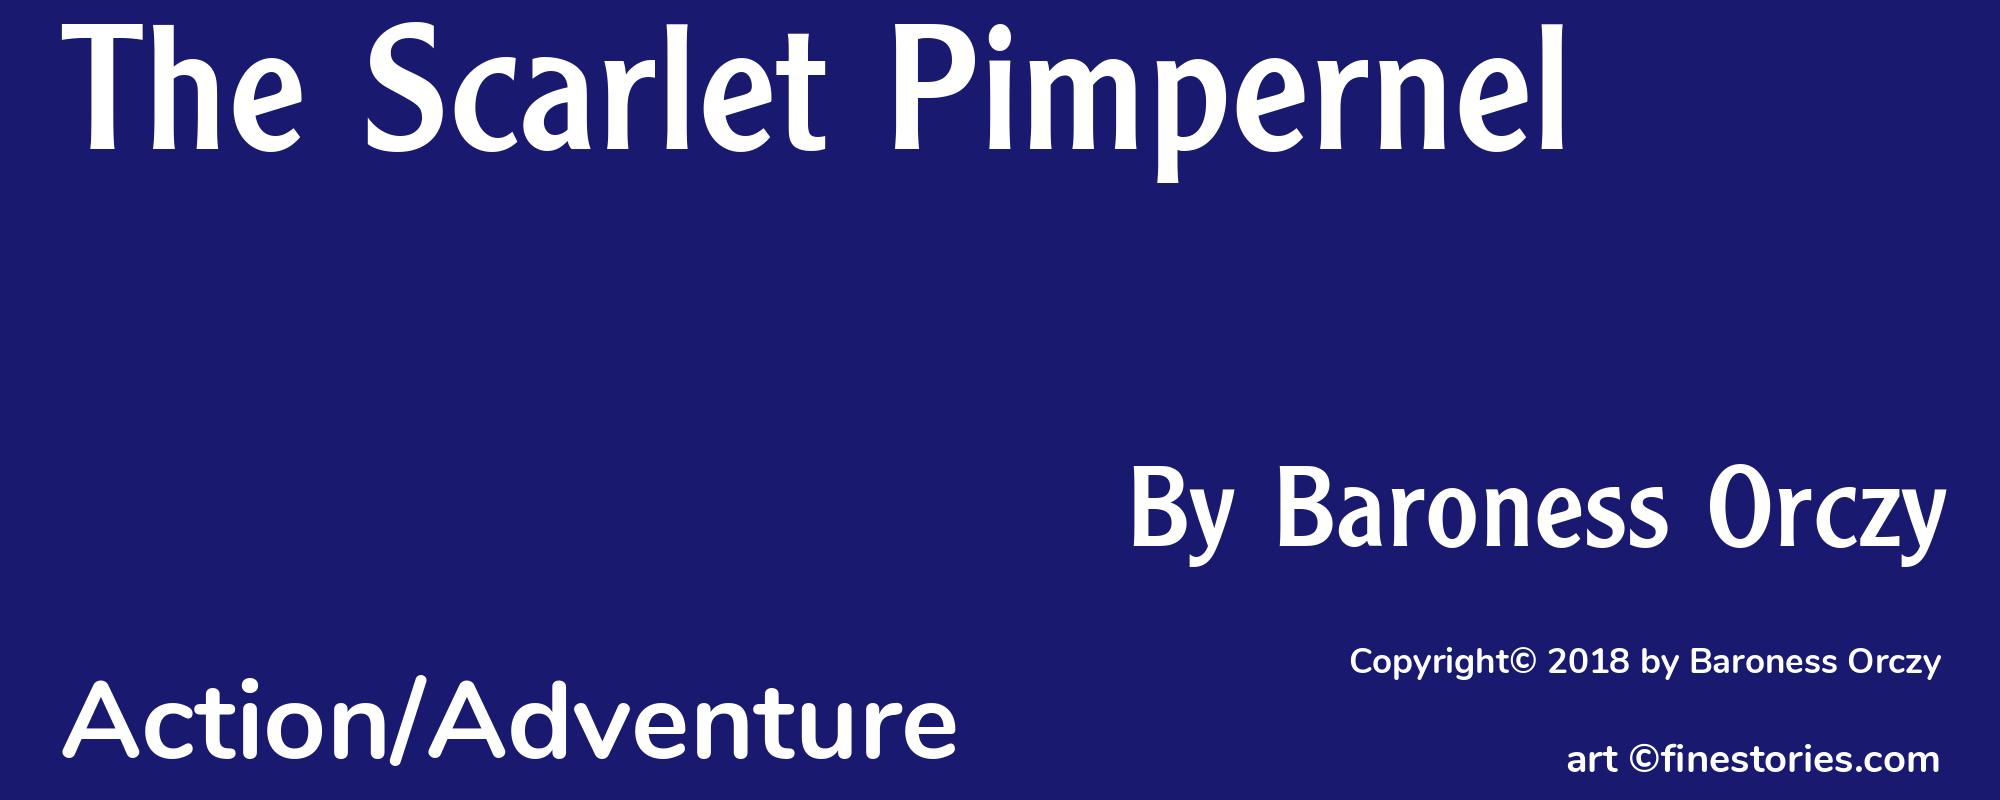 The Scarlet Pimpernel - Cover